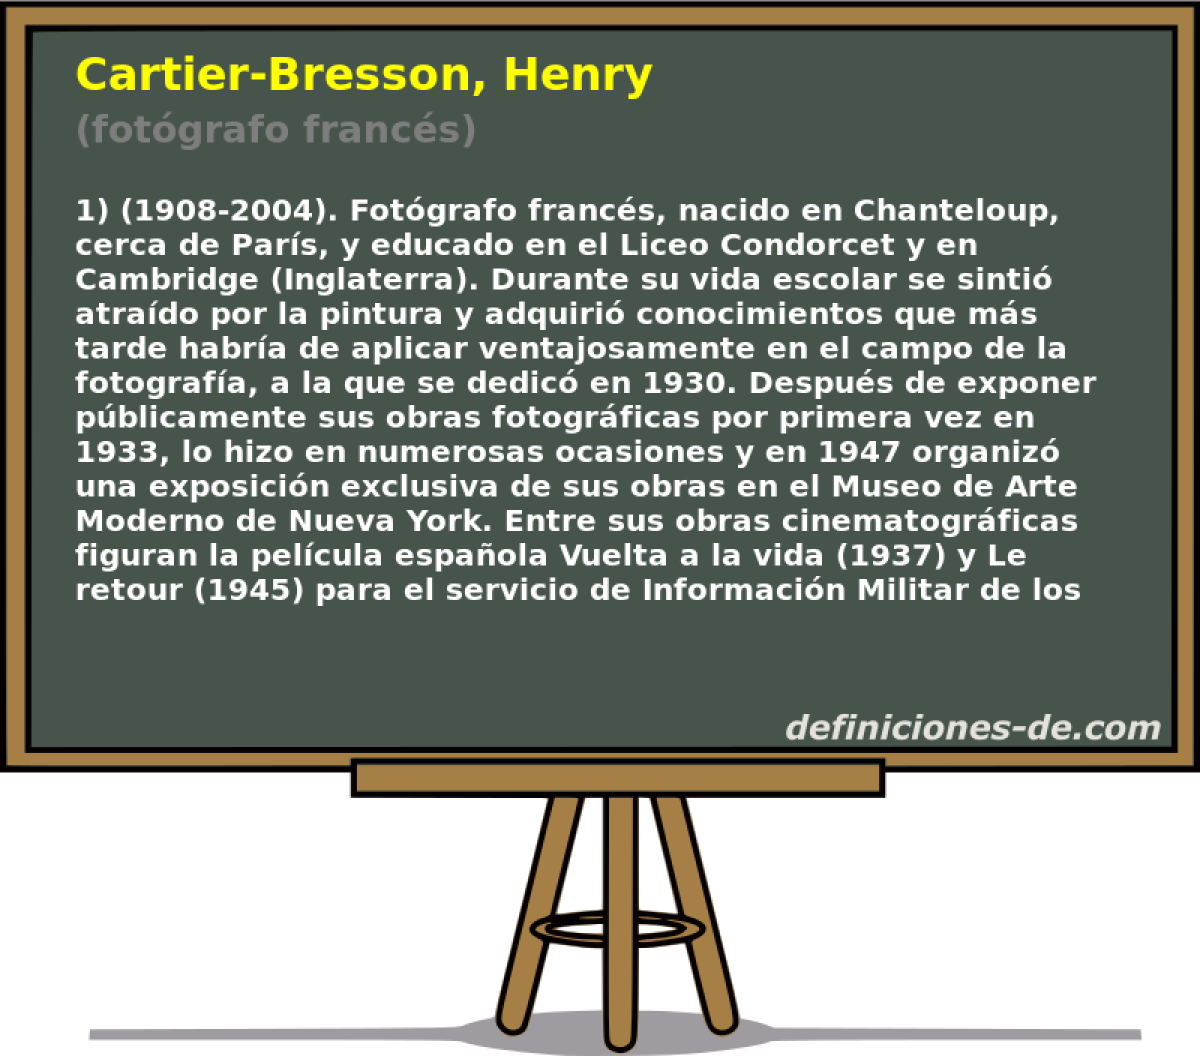 Cartier-Bresson, Henry (fotgrafo francs)